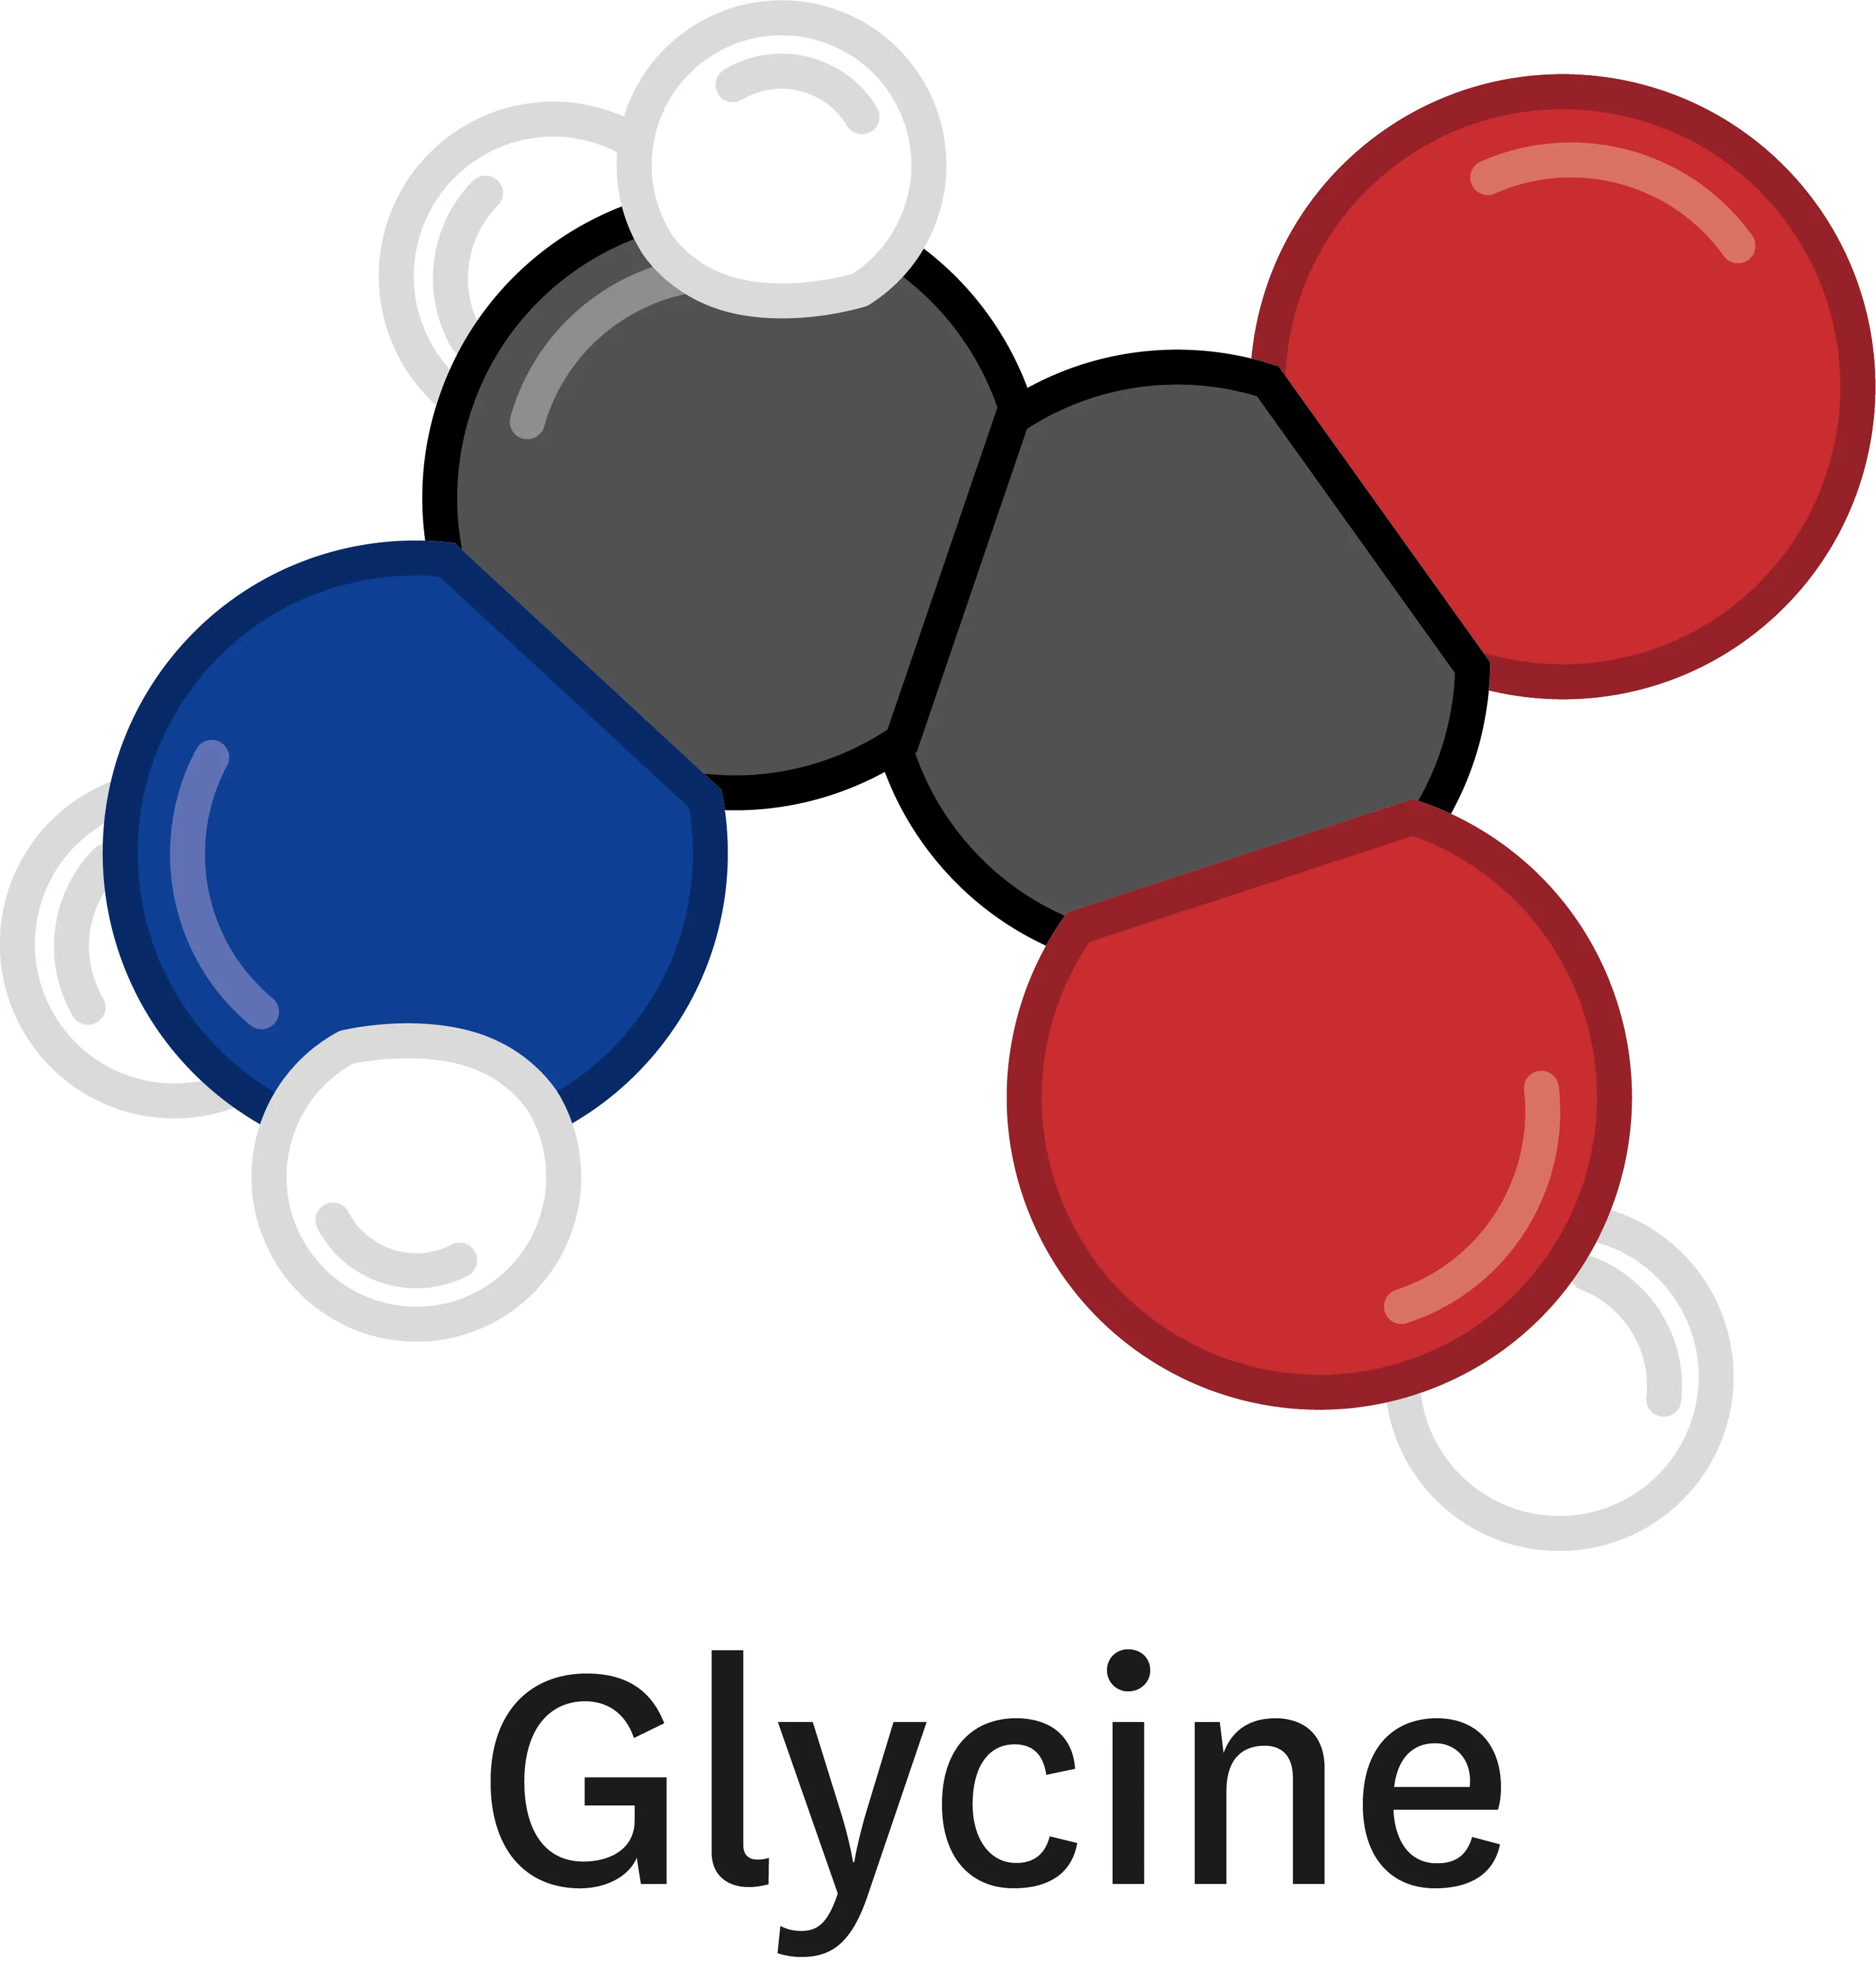 Glycine.